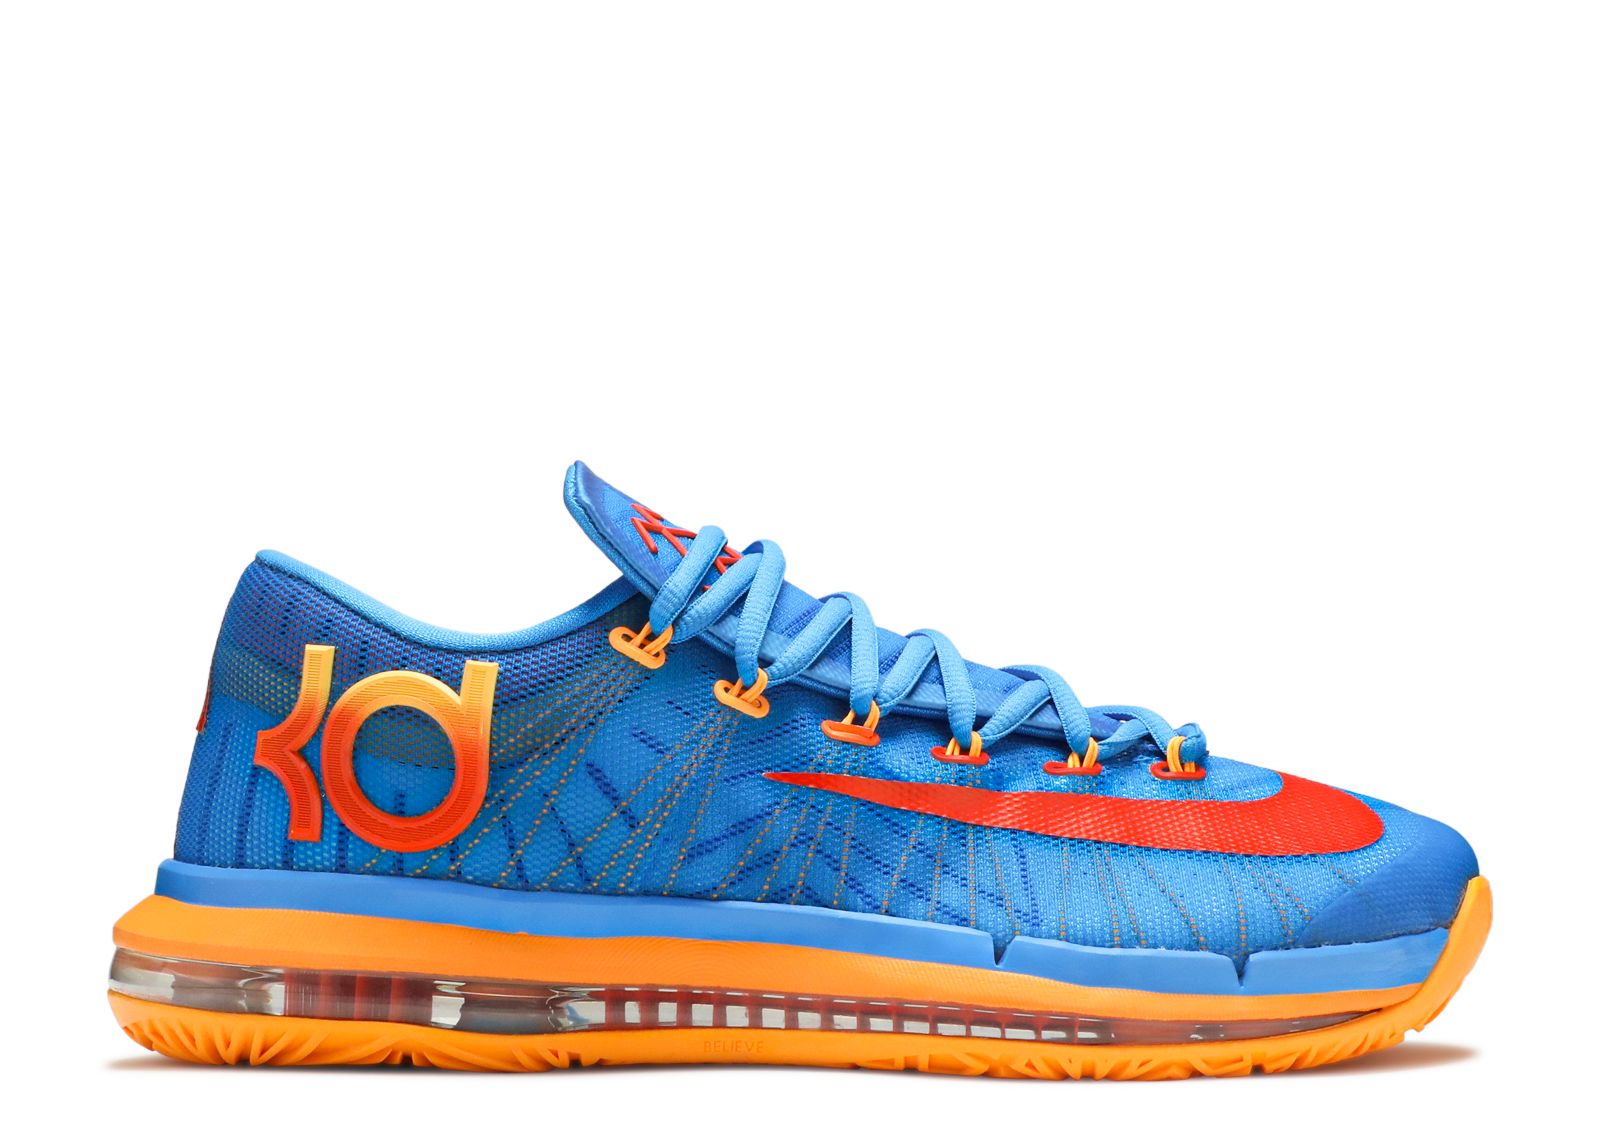 kd 6 blue and orange